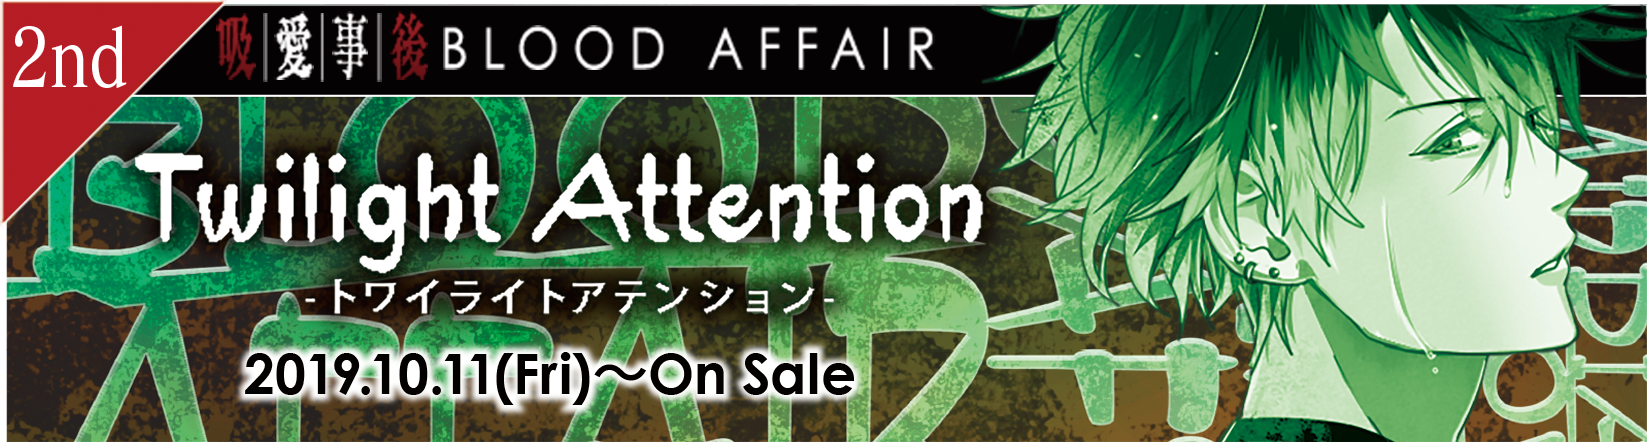 BLOOD AFFAIR -Twilight Attention-